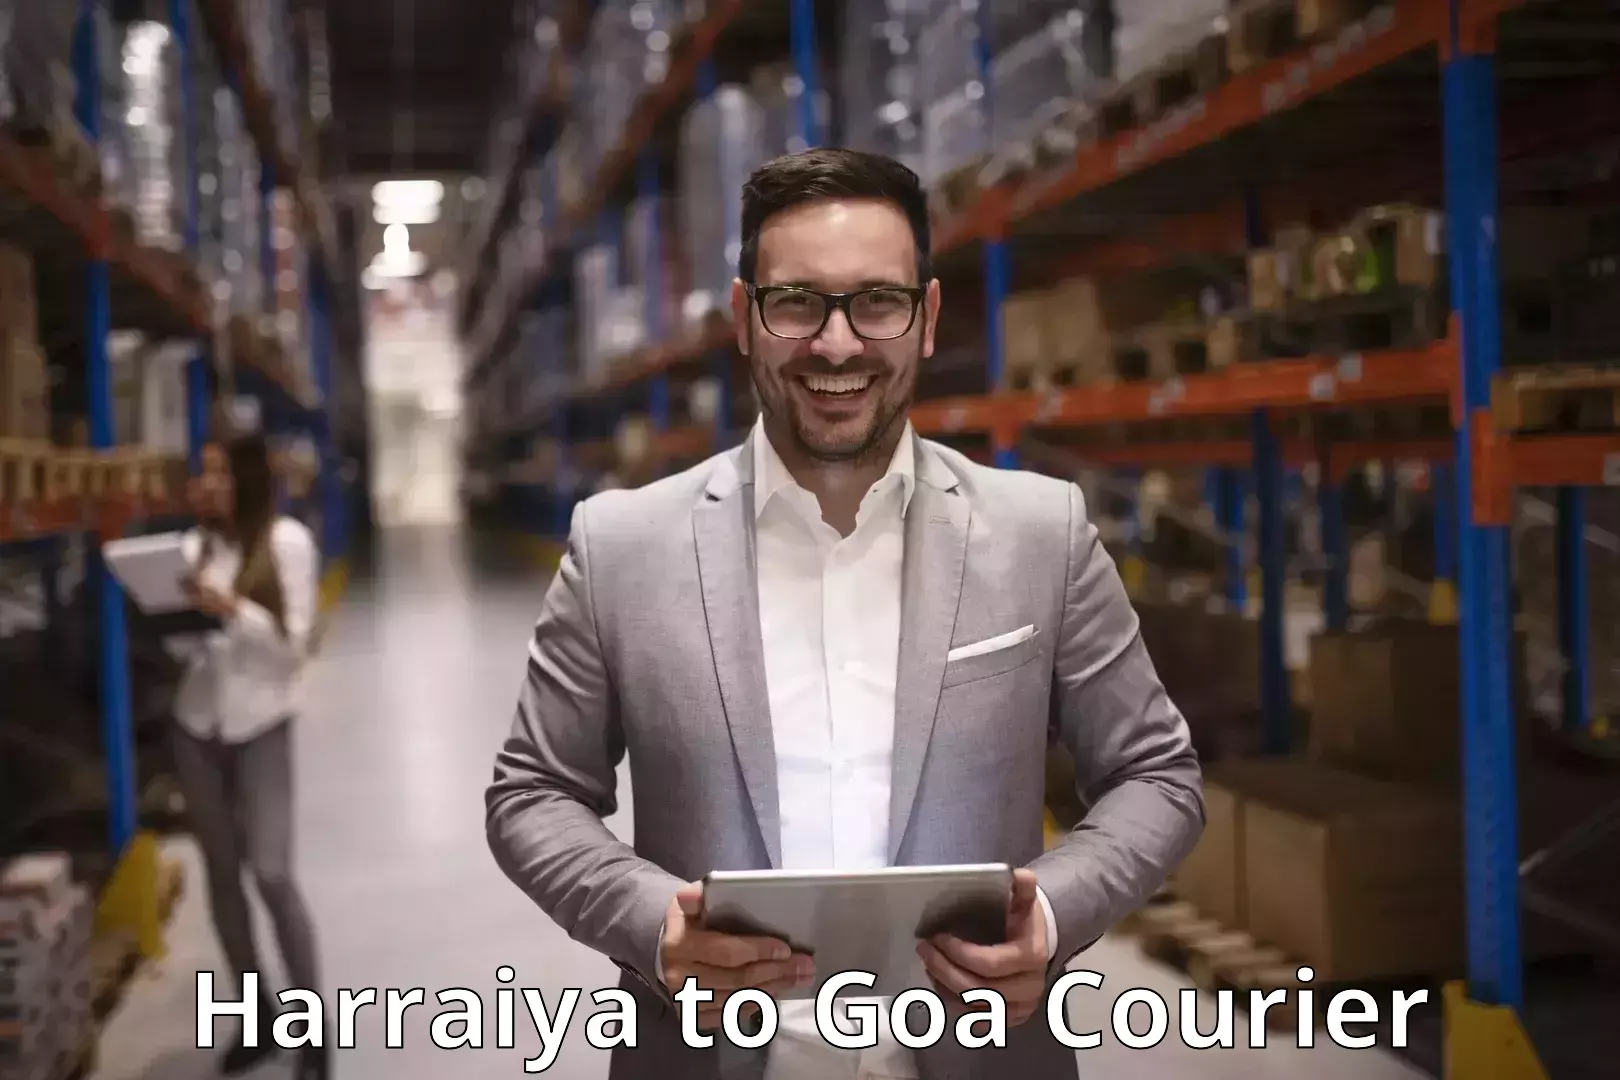 Courier service partnerships Harraiya to Goa